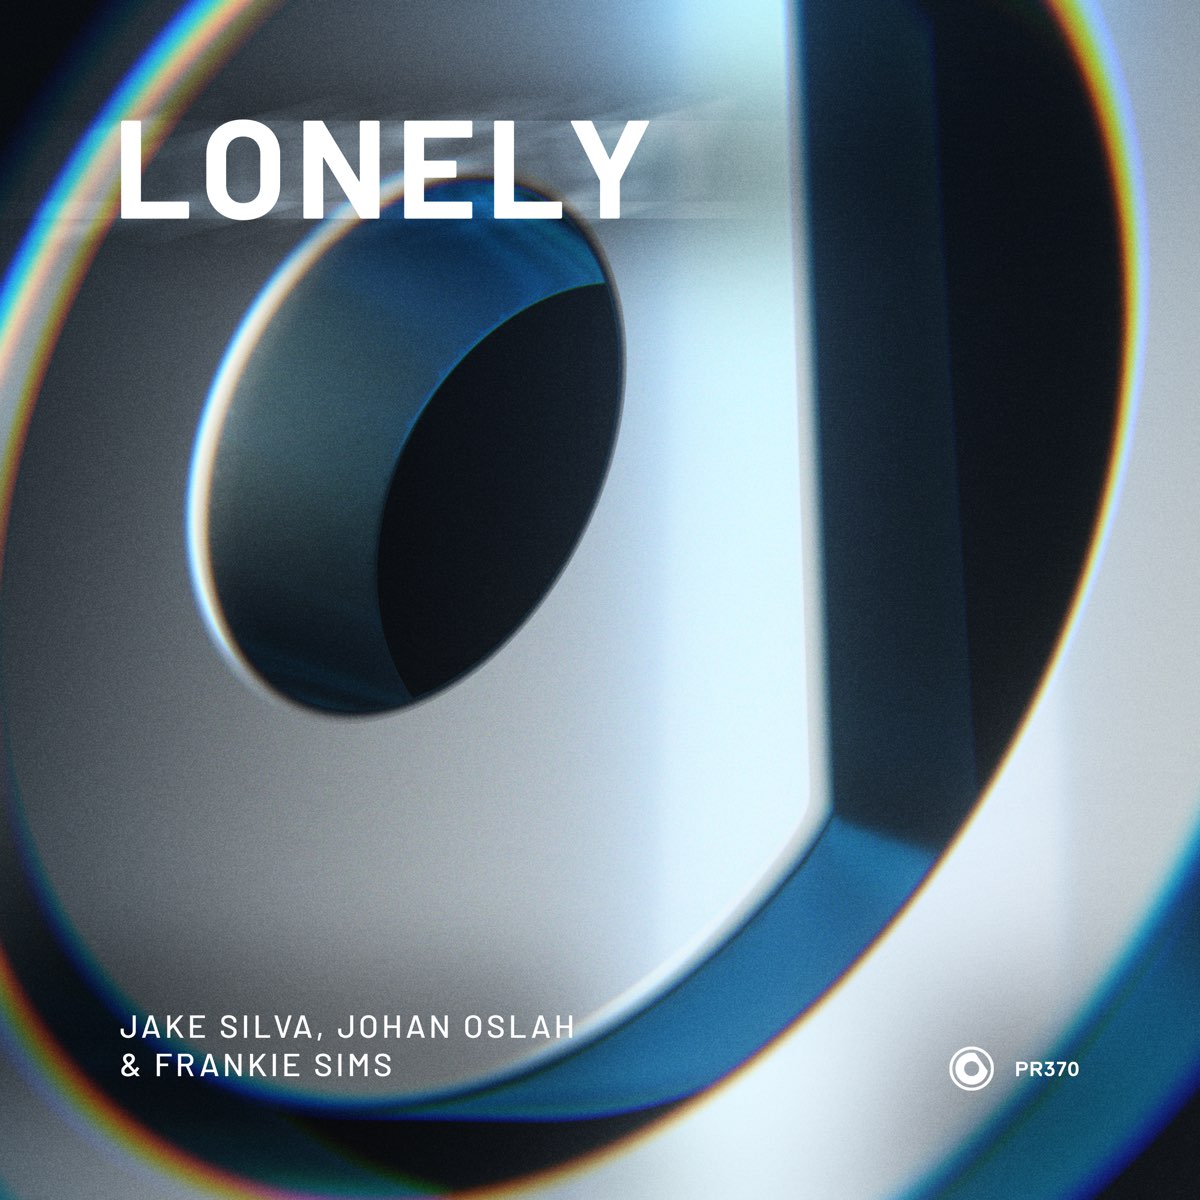 Jake Silva, Johan Oslah, & Frankie Sims Lonely cover artwork